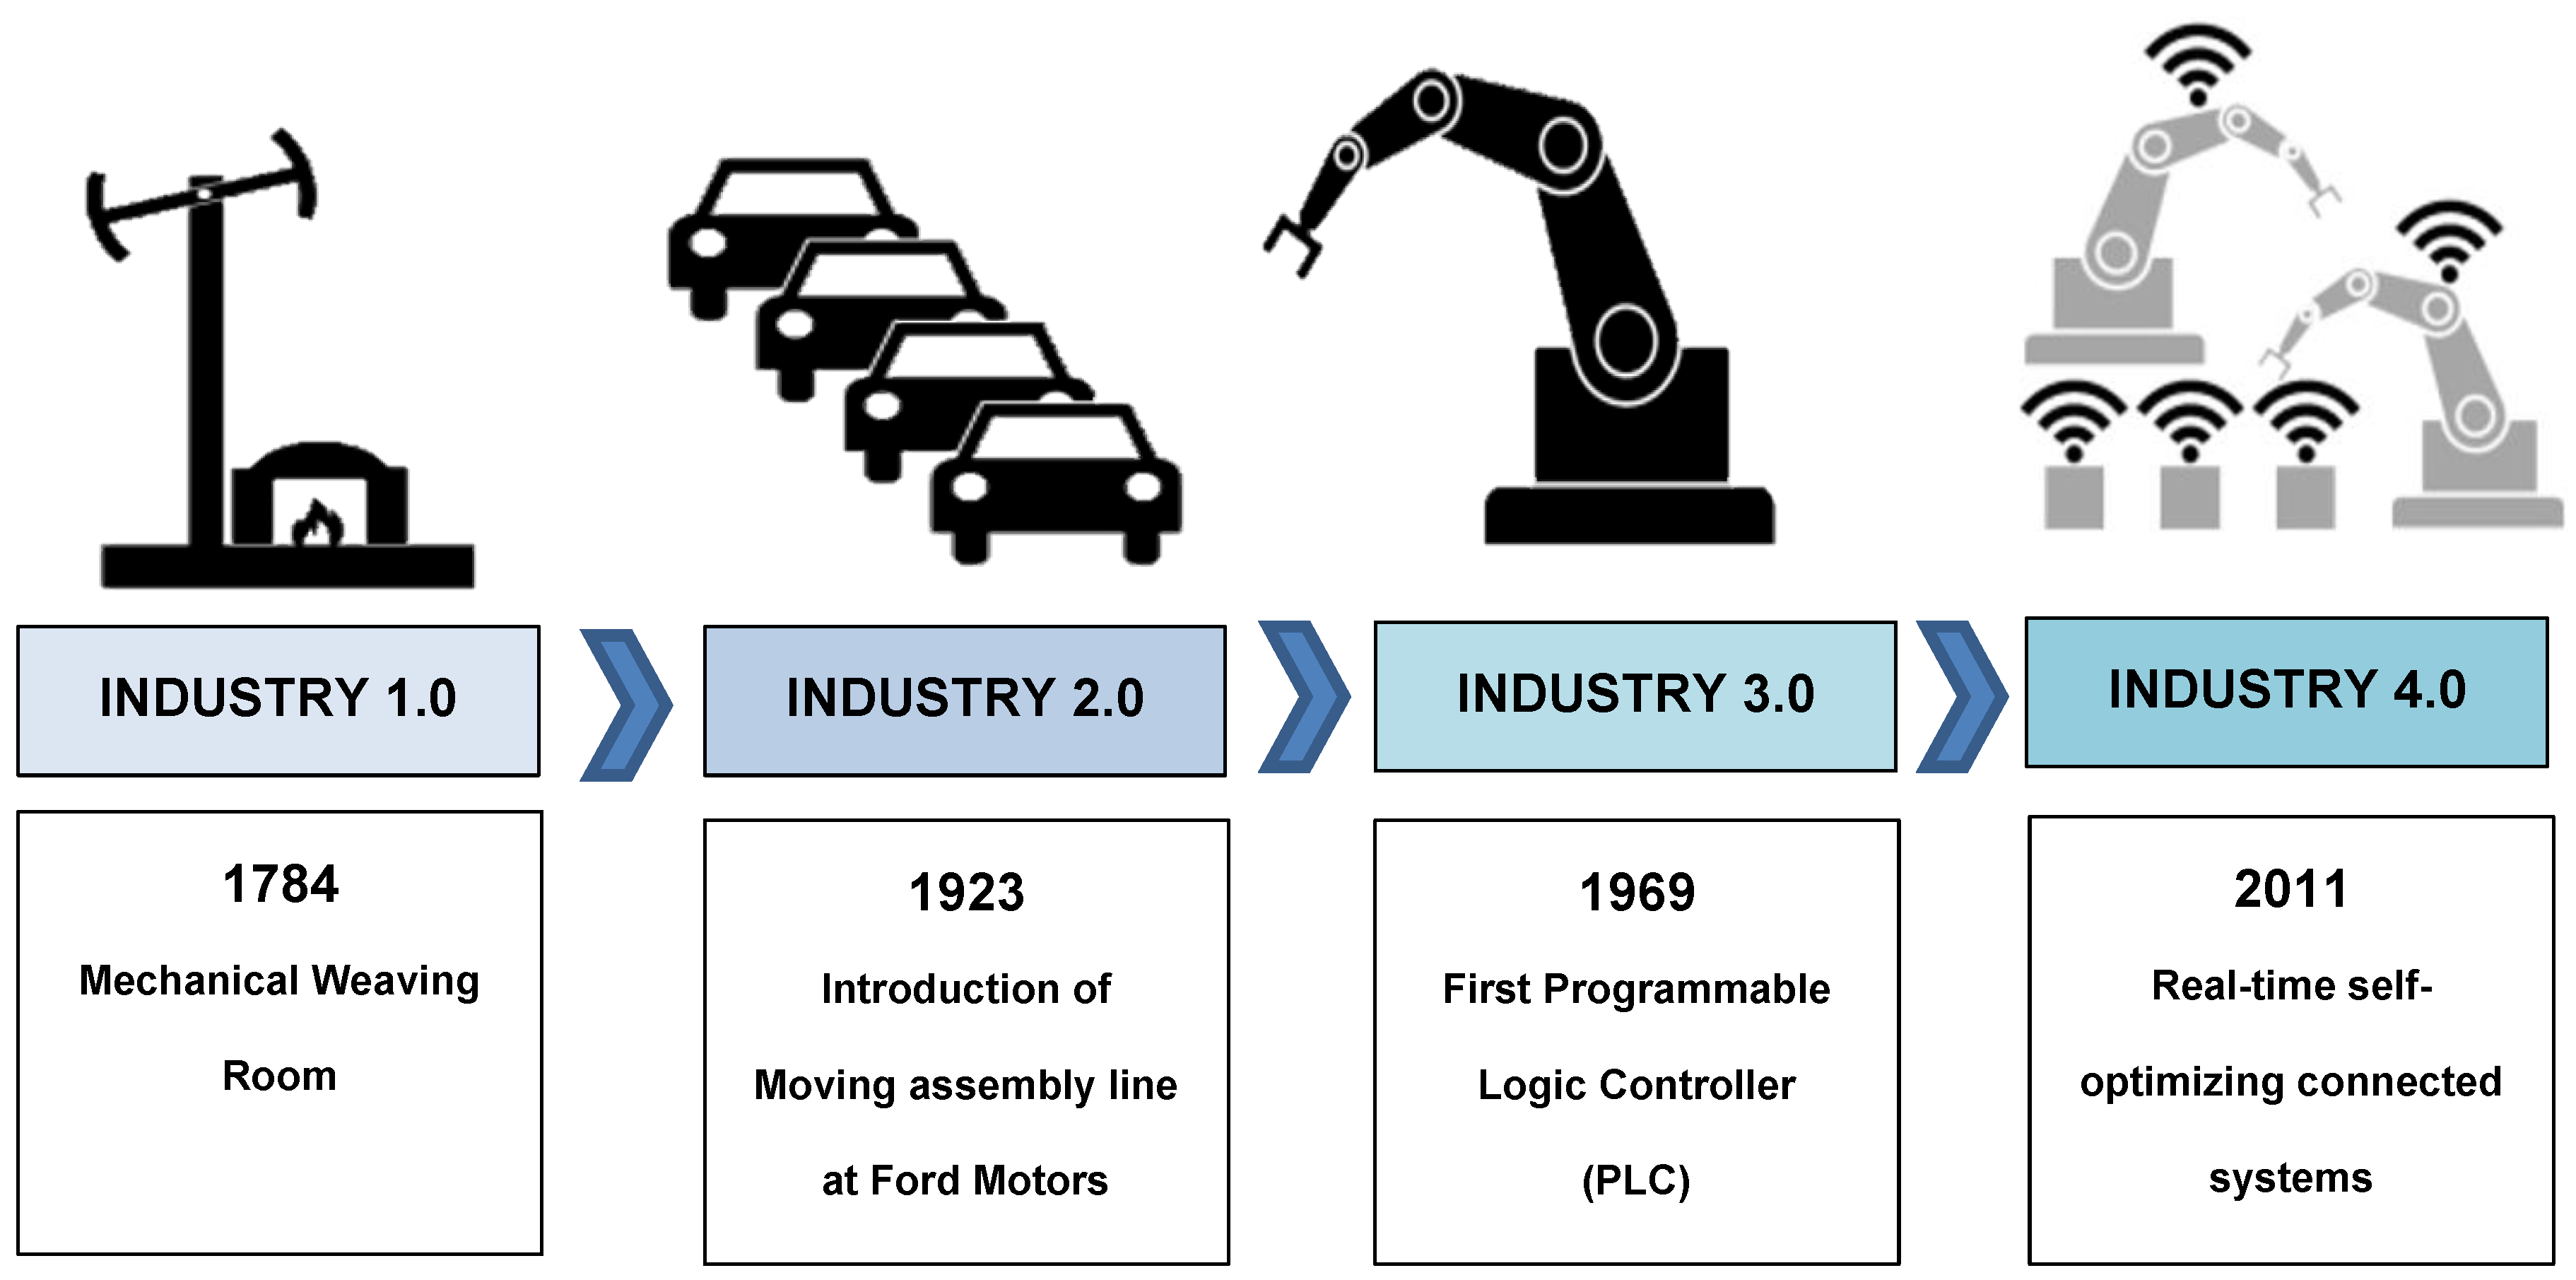 Industry 13